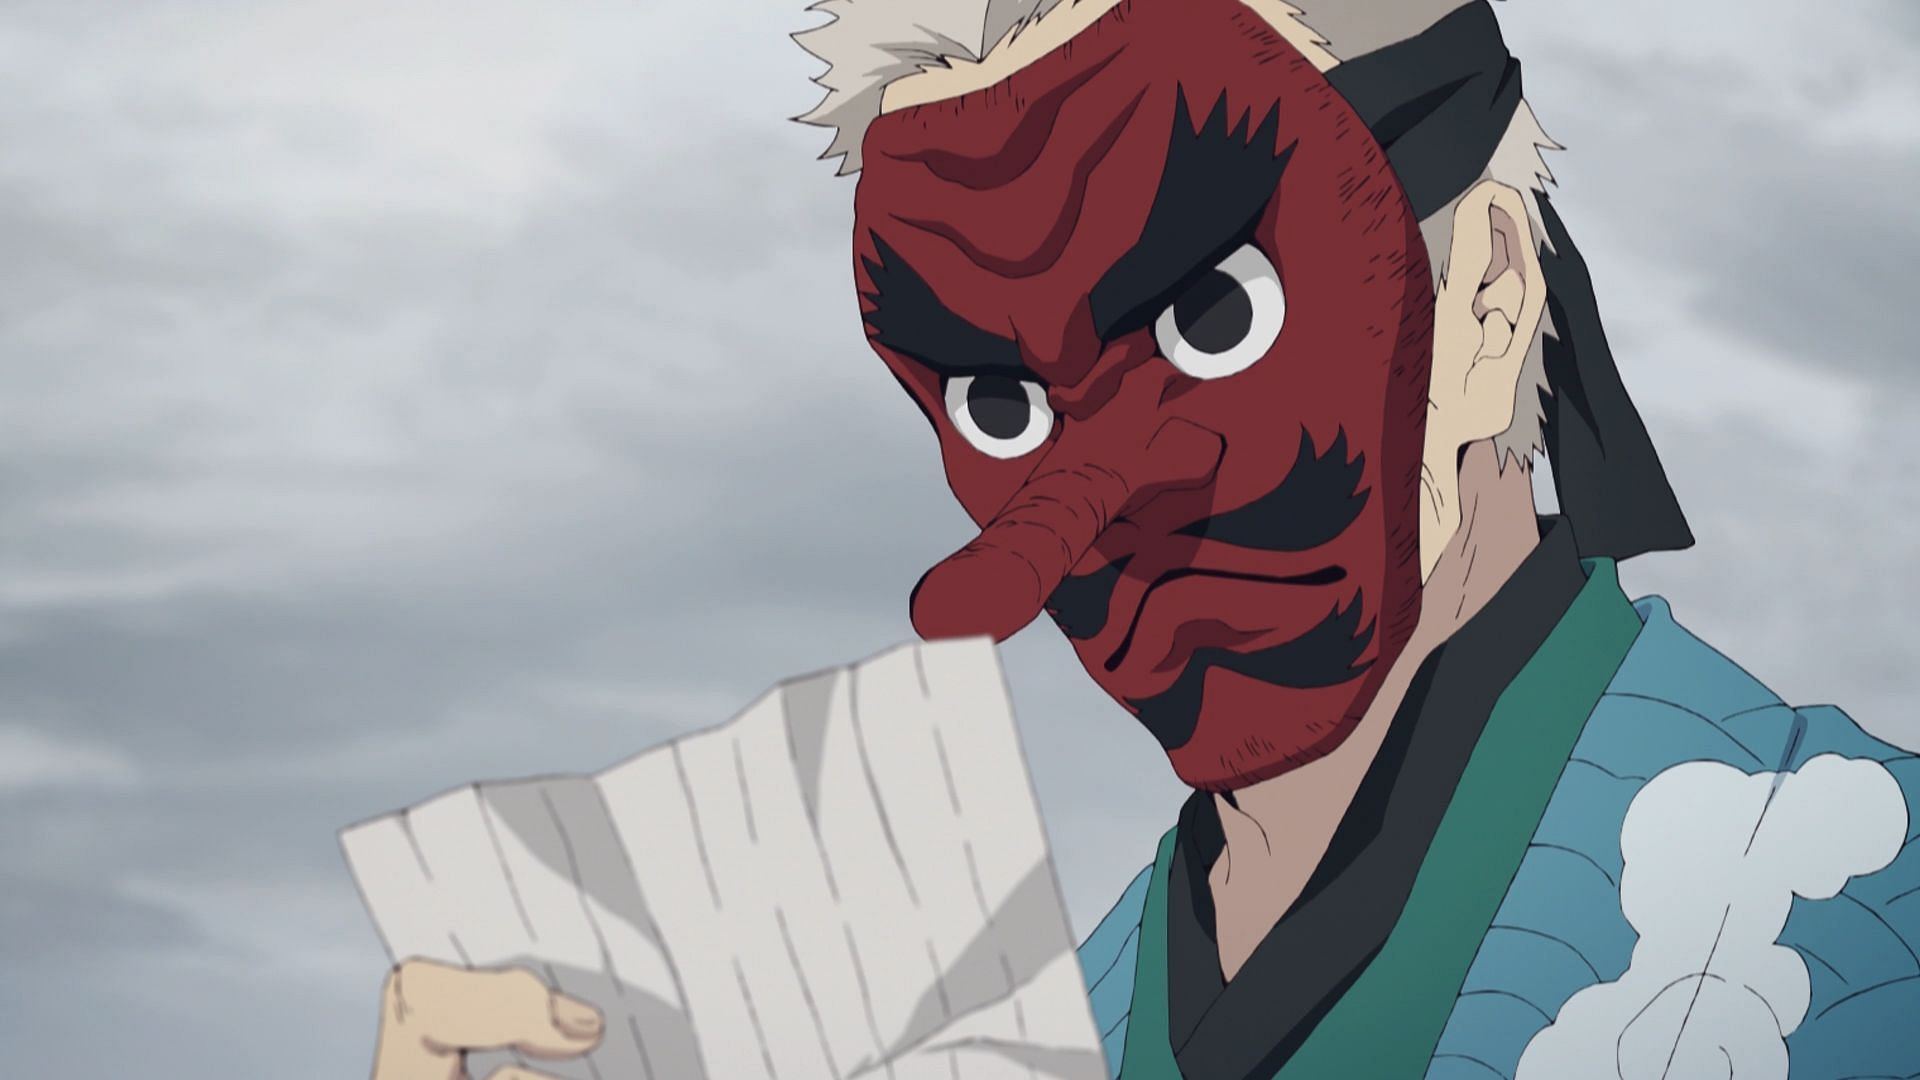 Sakonji Urokodaki as seen in the anime series (Image via Ufotable)